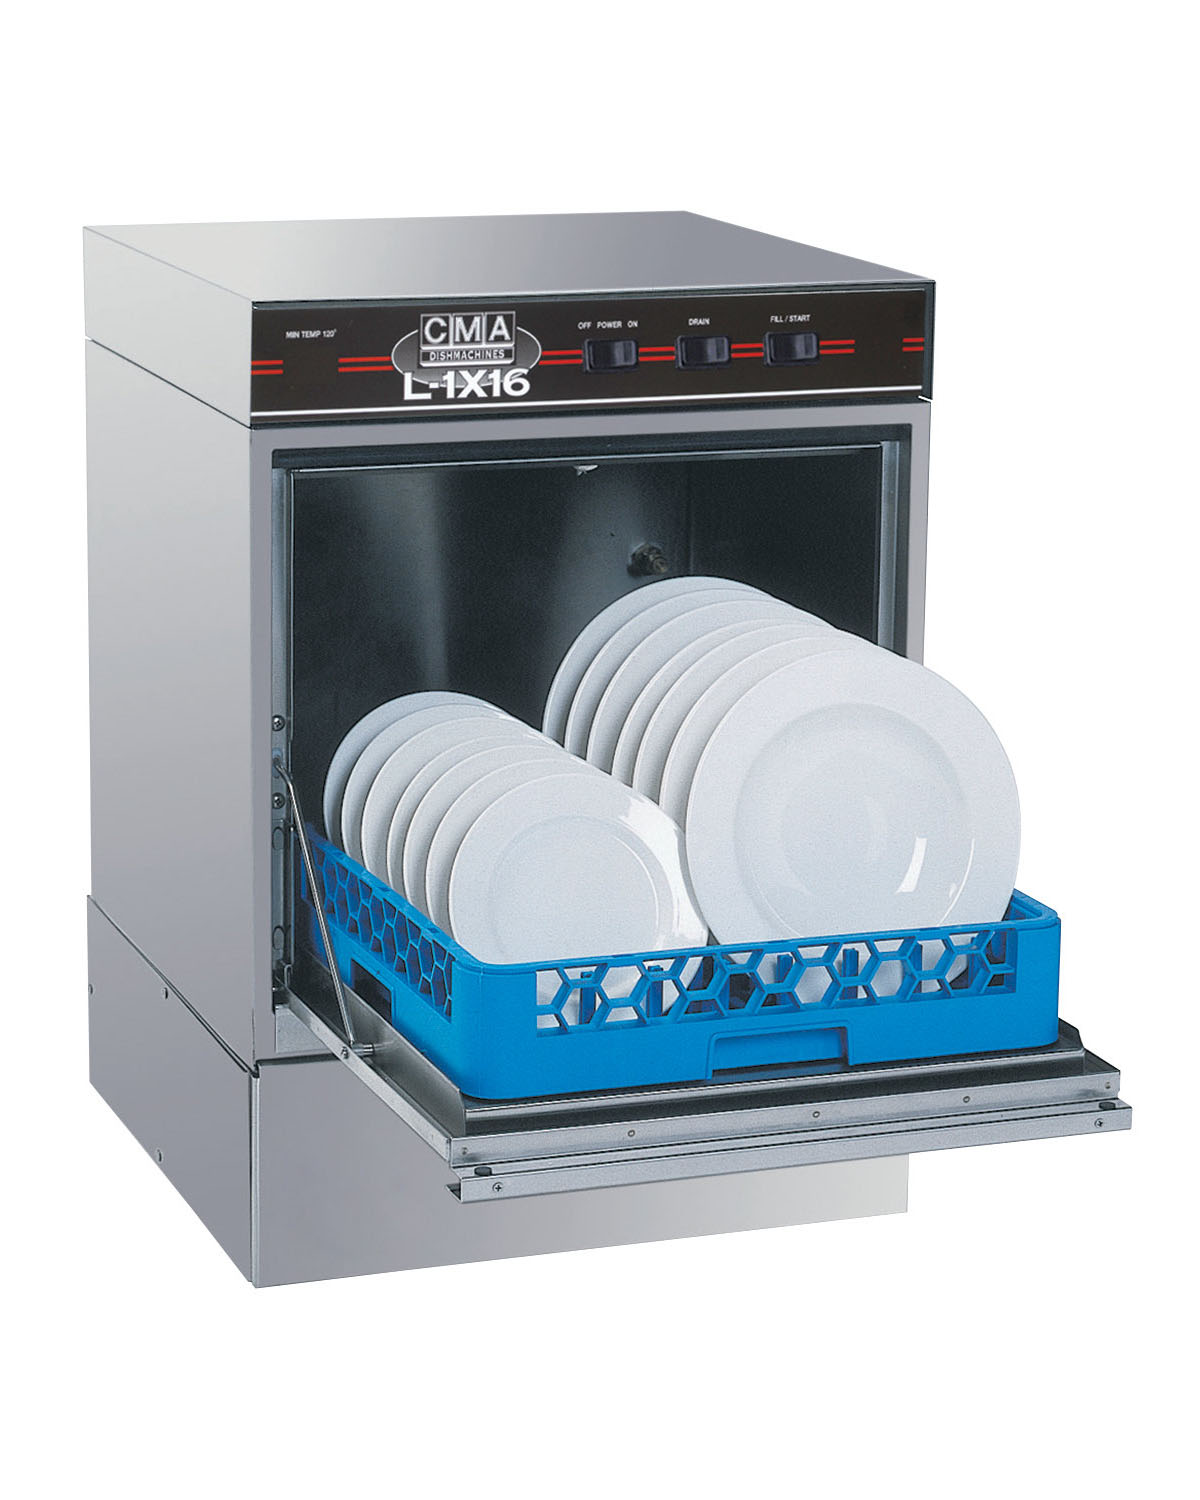 CMA Dishmachines L-1X16 Undercounter Dishwasher Low Temperature 30 Racks Per Hour